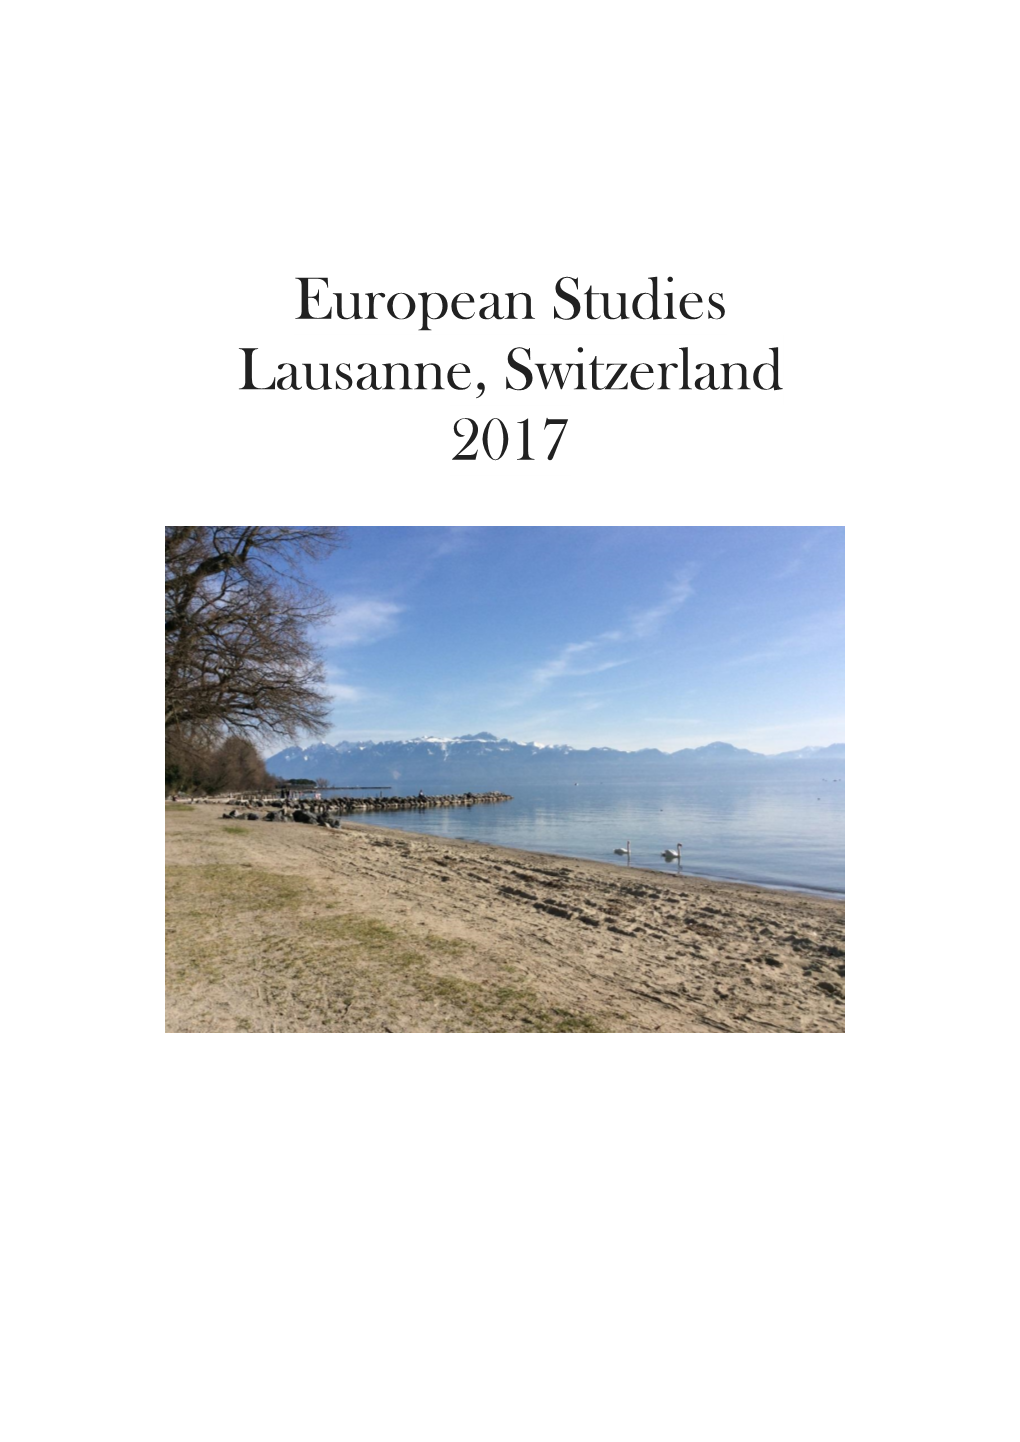 European Studies Lausanne, Switzerland 2017 Why I Chose European Studies